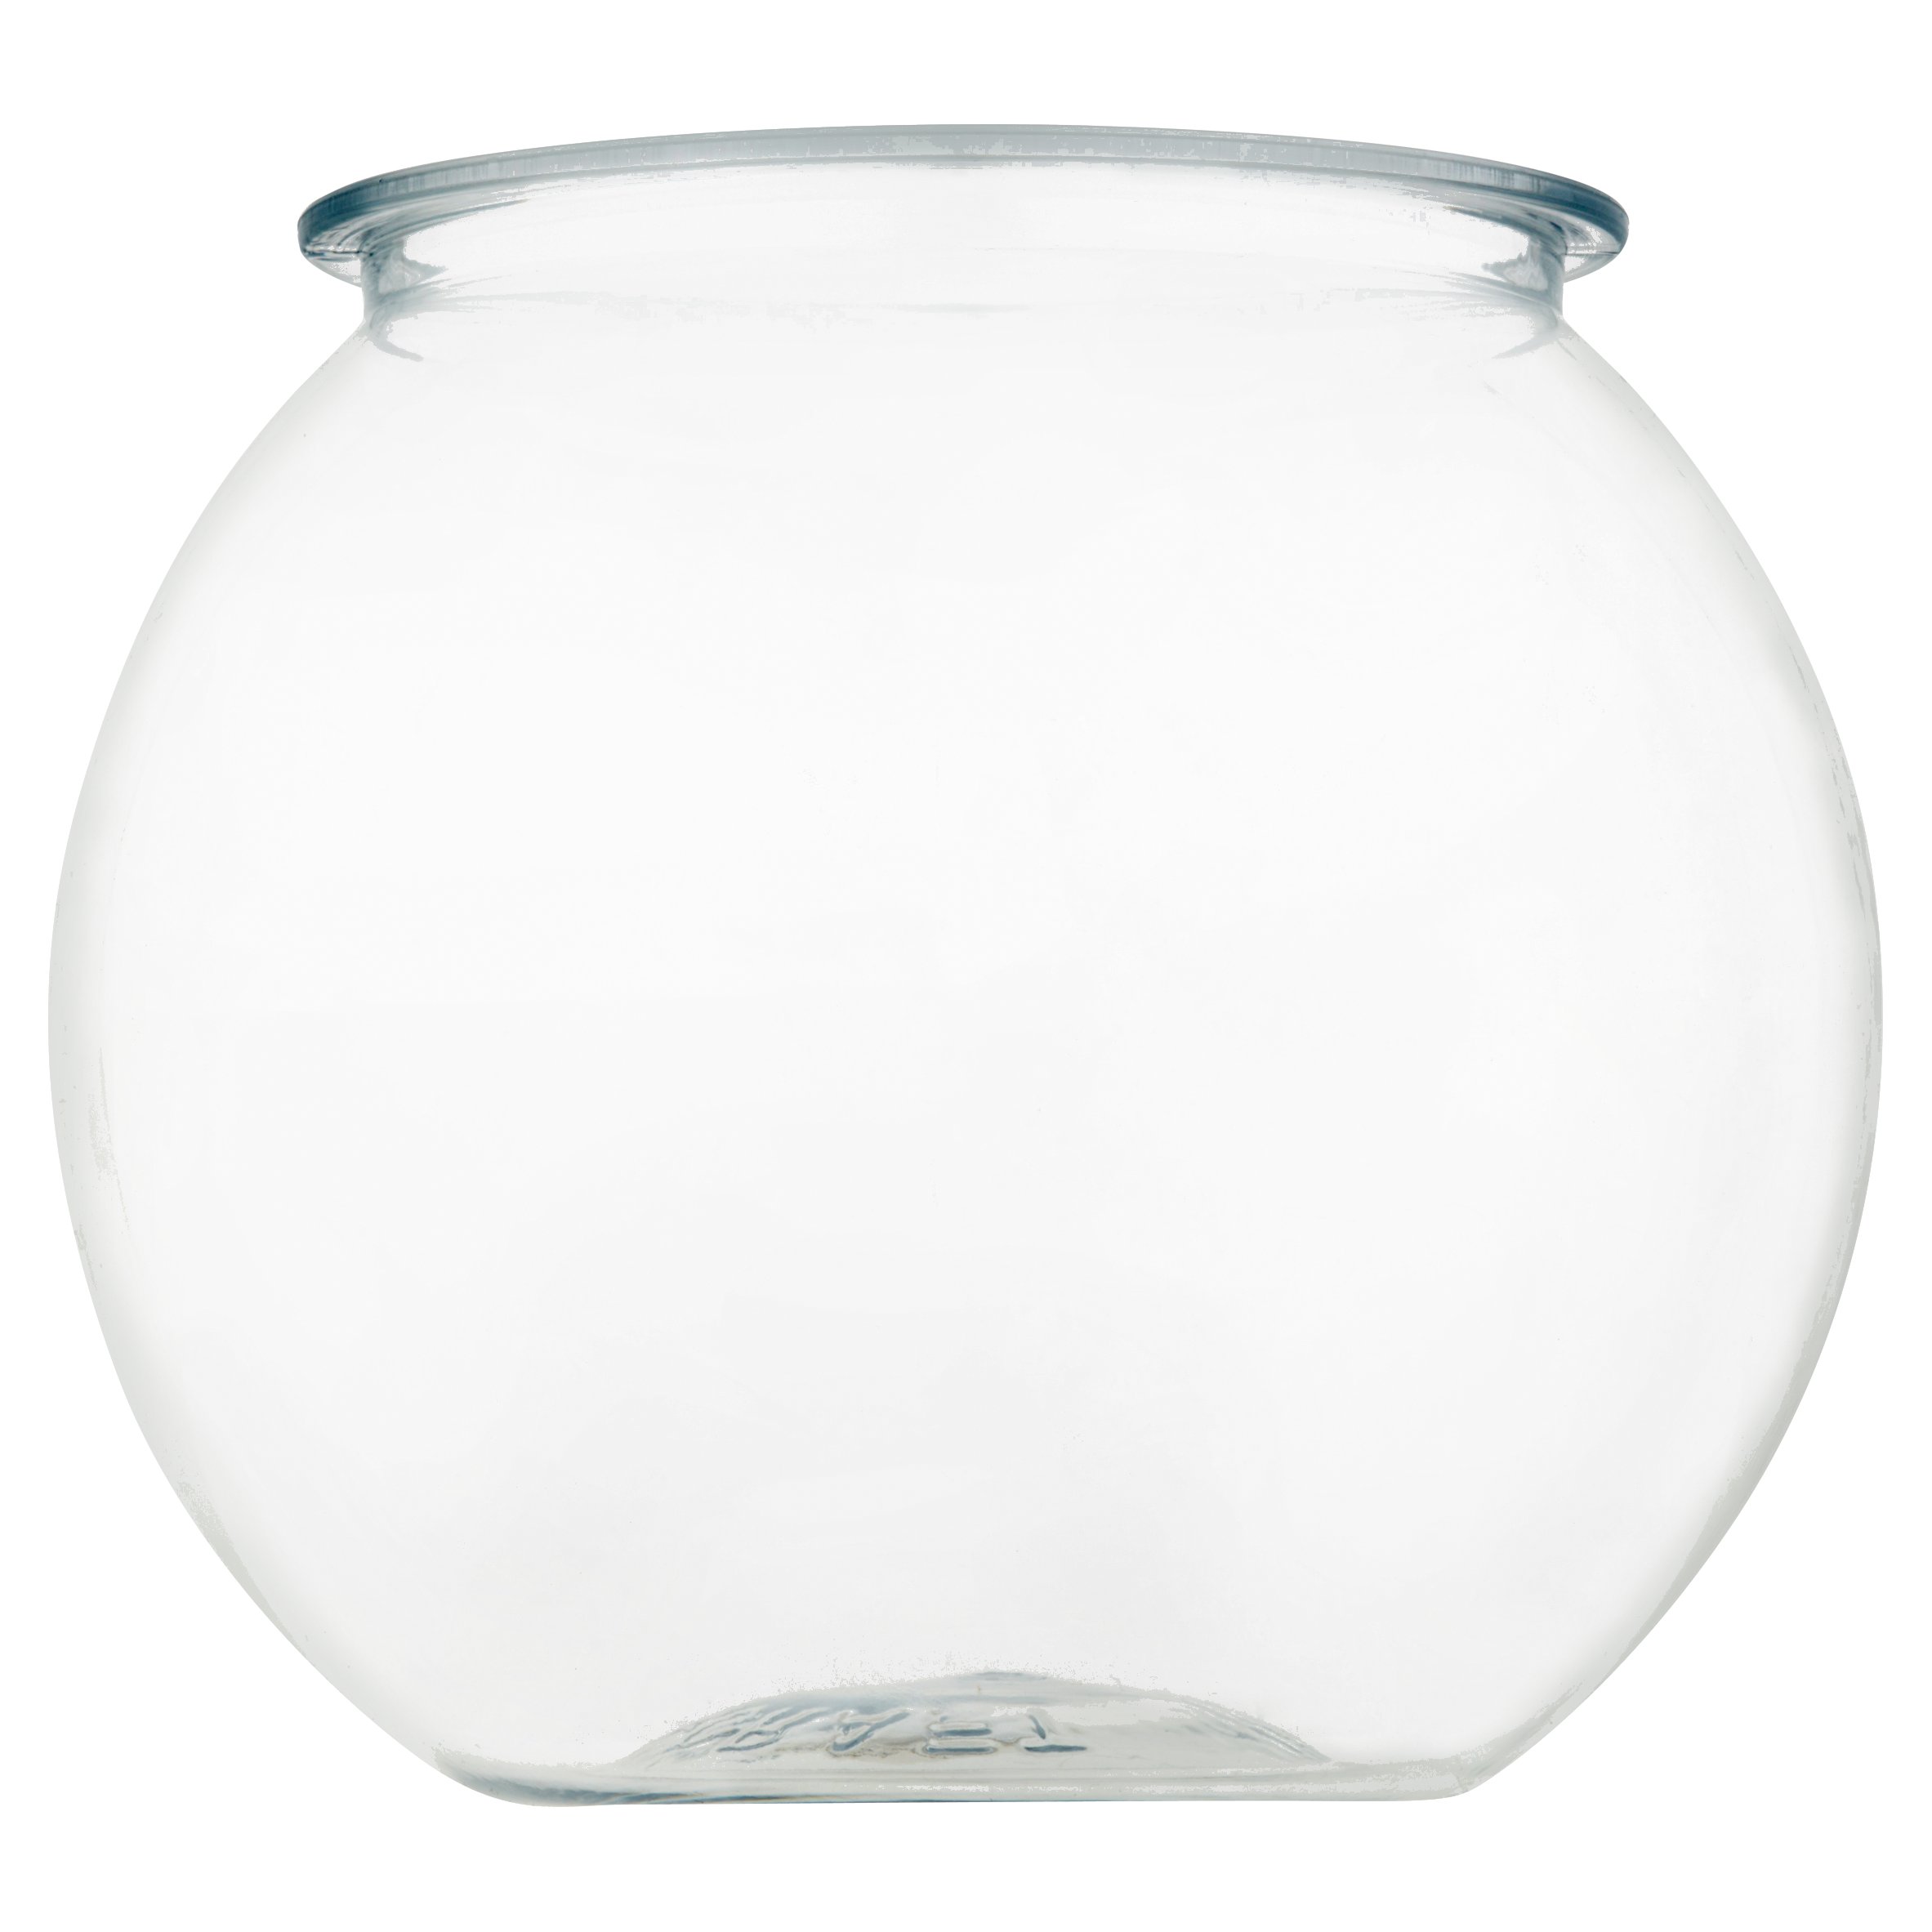 Hawkeye 1-Gallon Bubble-Shaped Fish Bowl - image 2 of 4